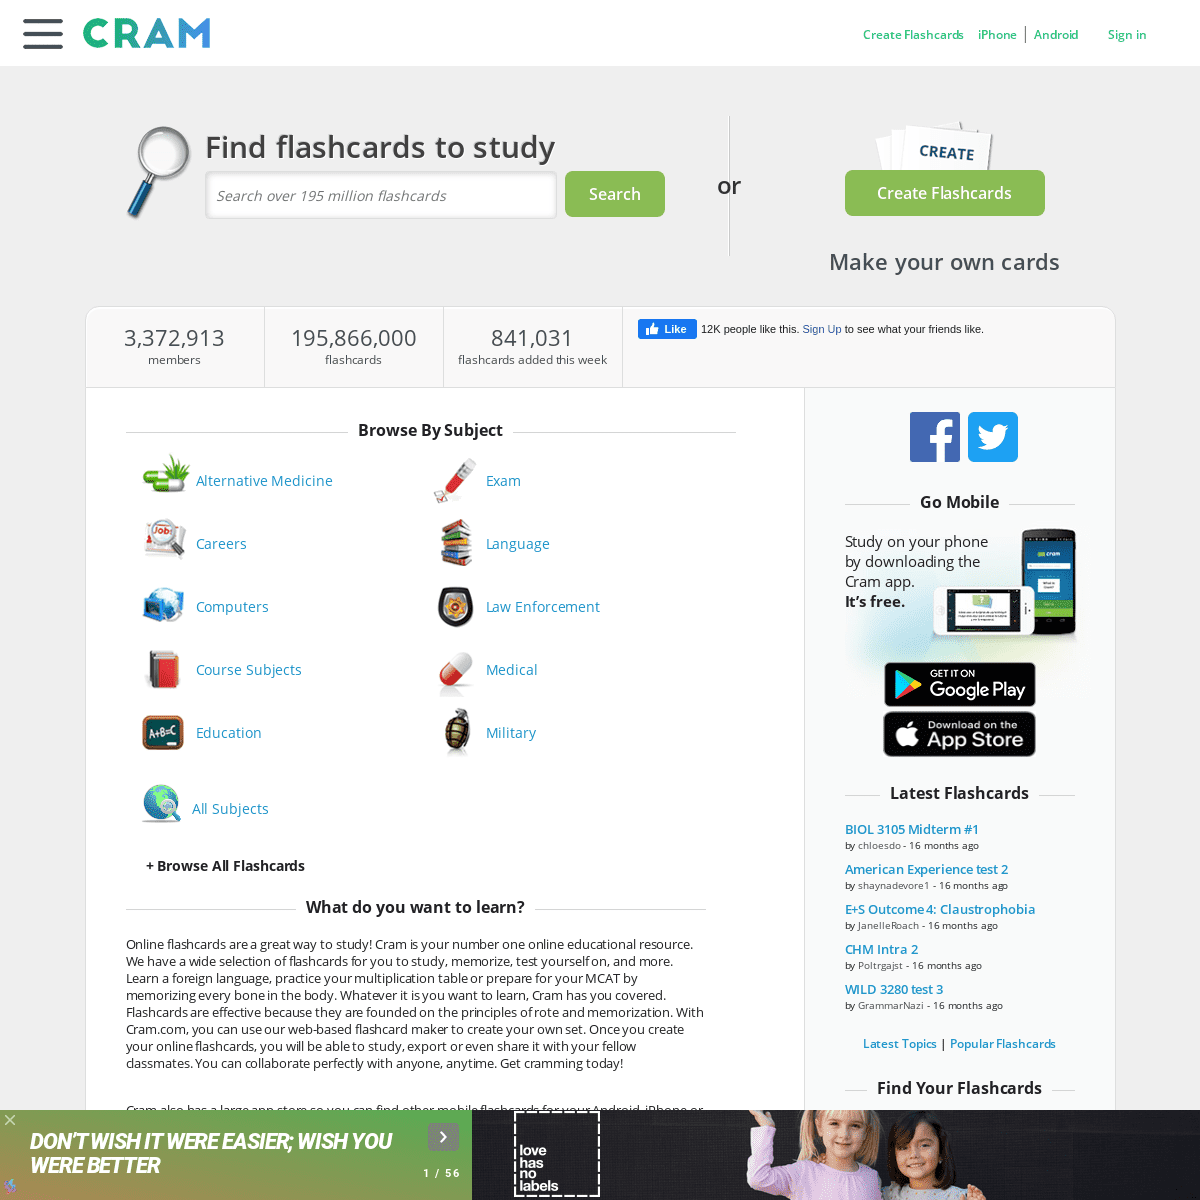 A complete backup of cram.com